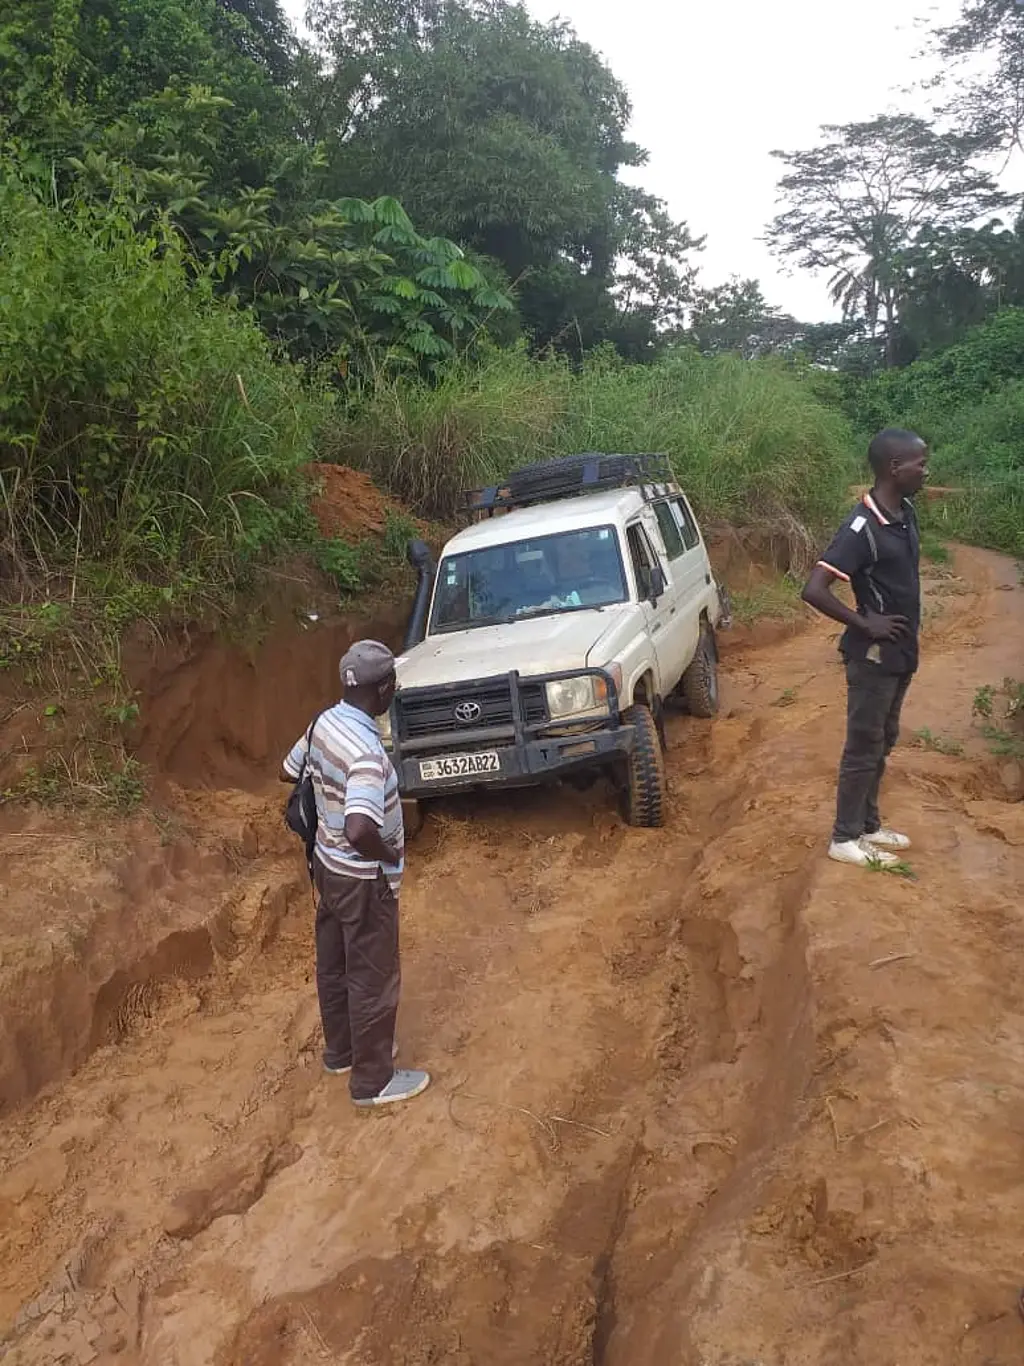  trachoma surveyors in DRC